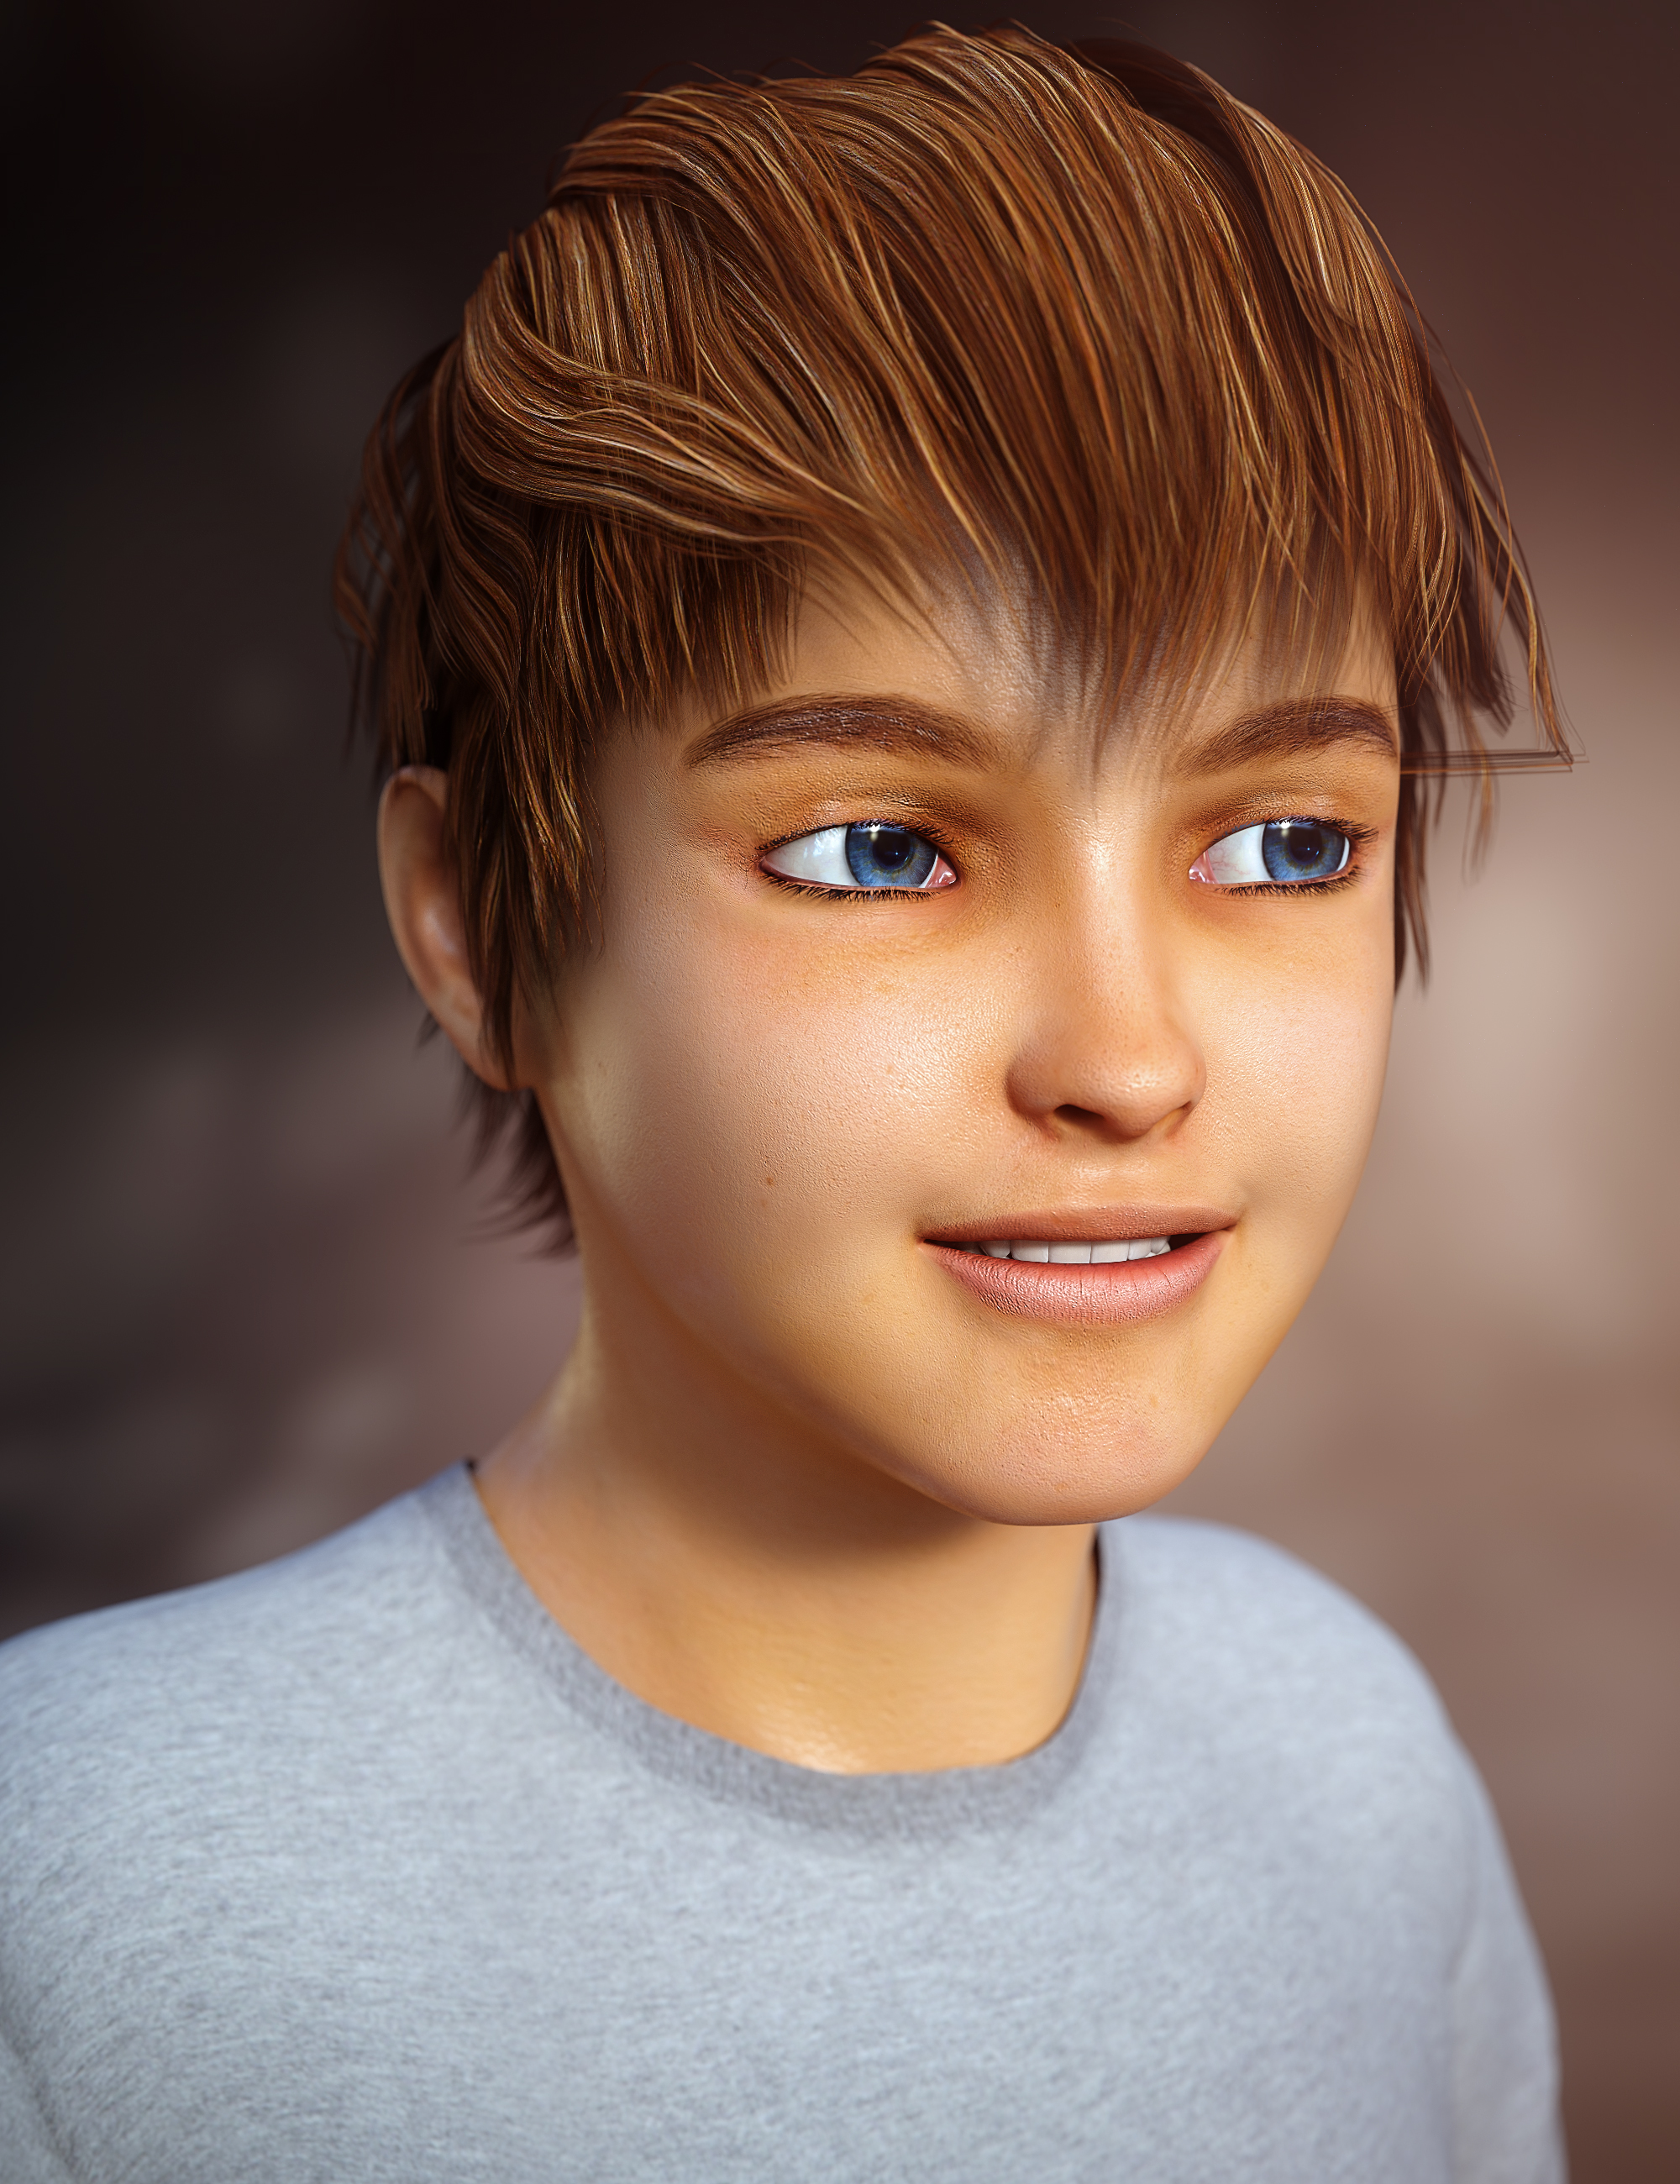 Young Teens 5 Justin by: ElliandraHandspan StudiosThorne, 3D Models by Daz 3D